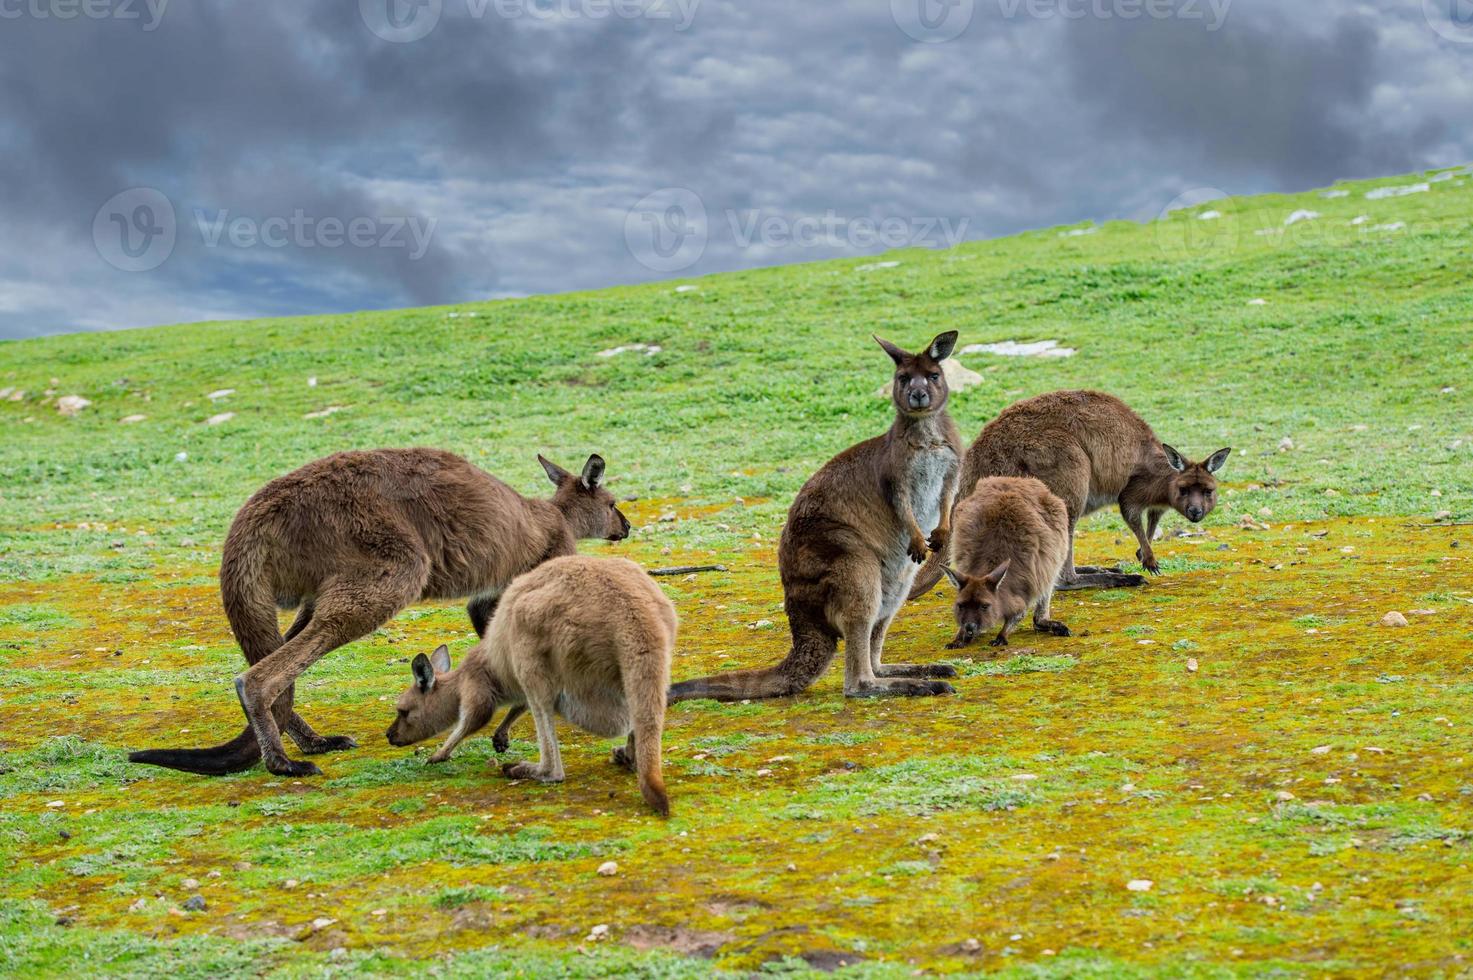 kangourou vous regarde sur l'herbe photo